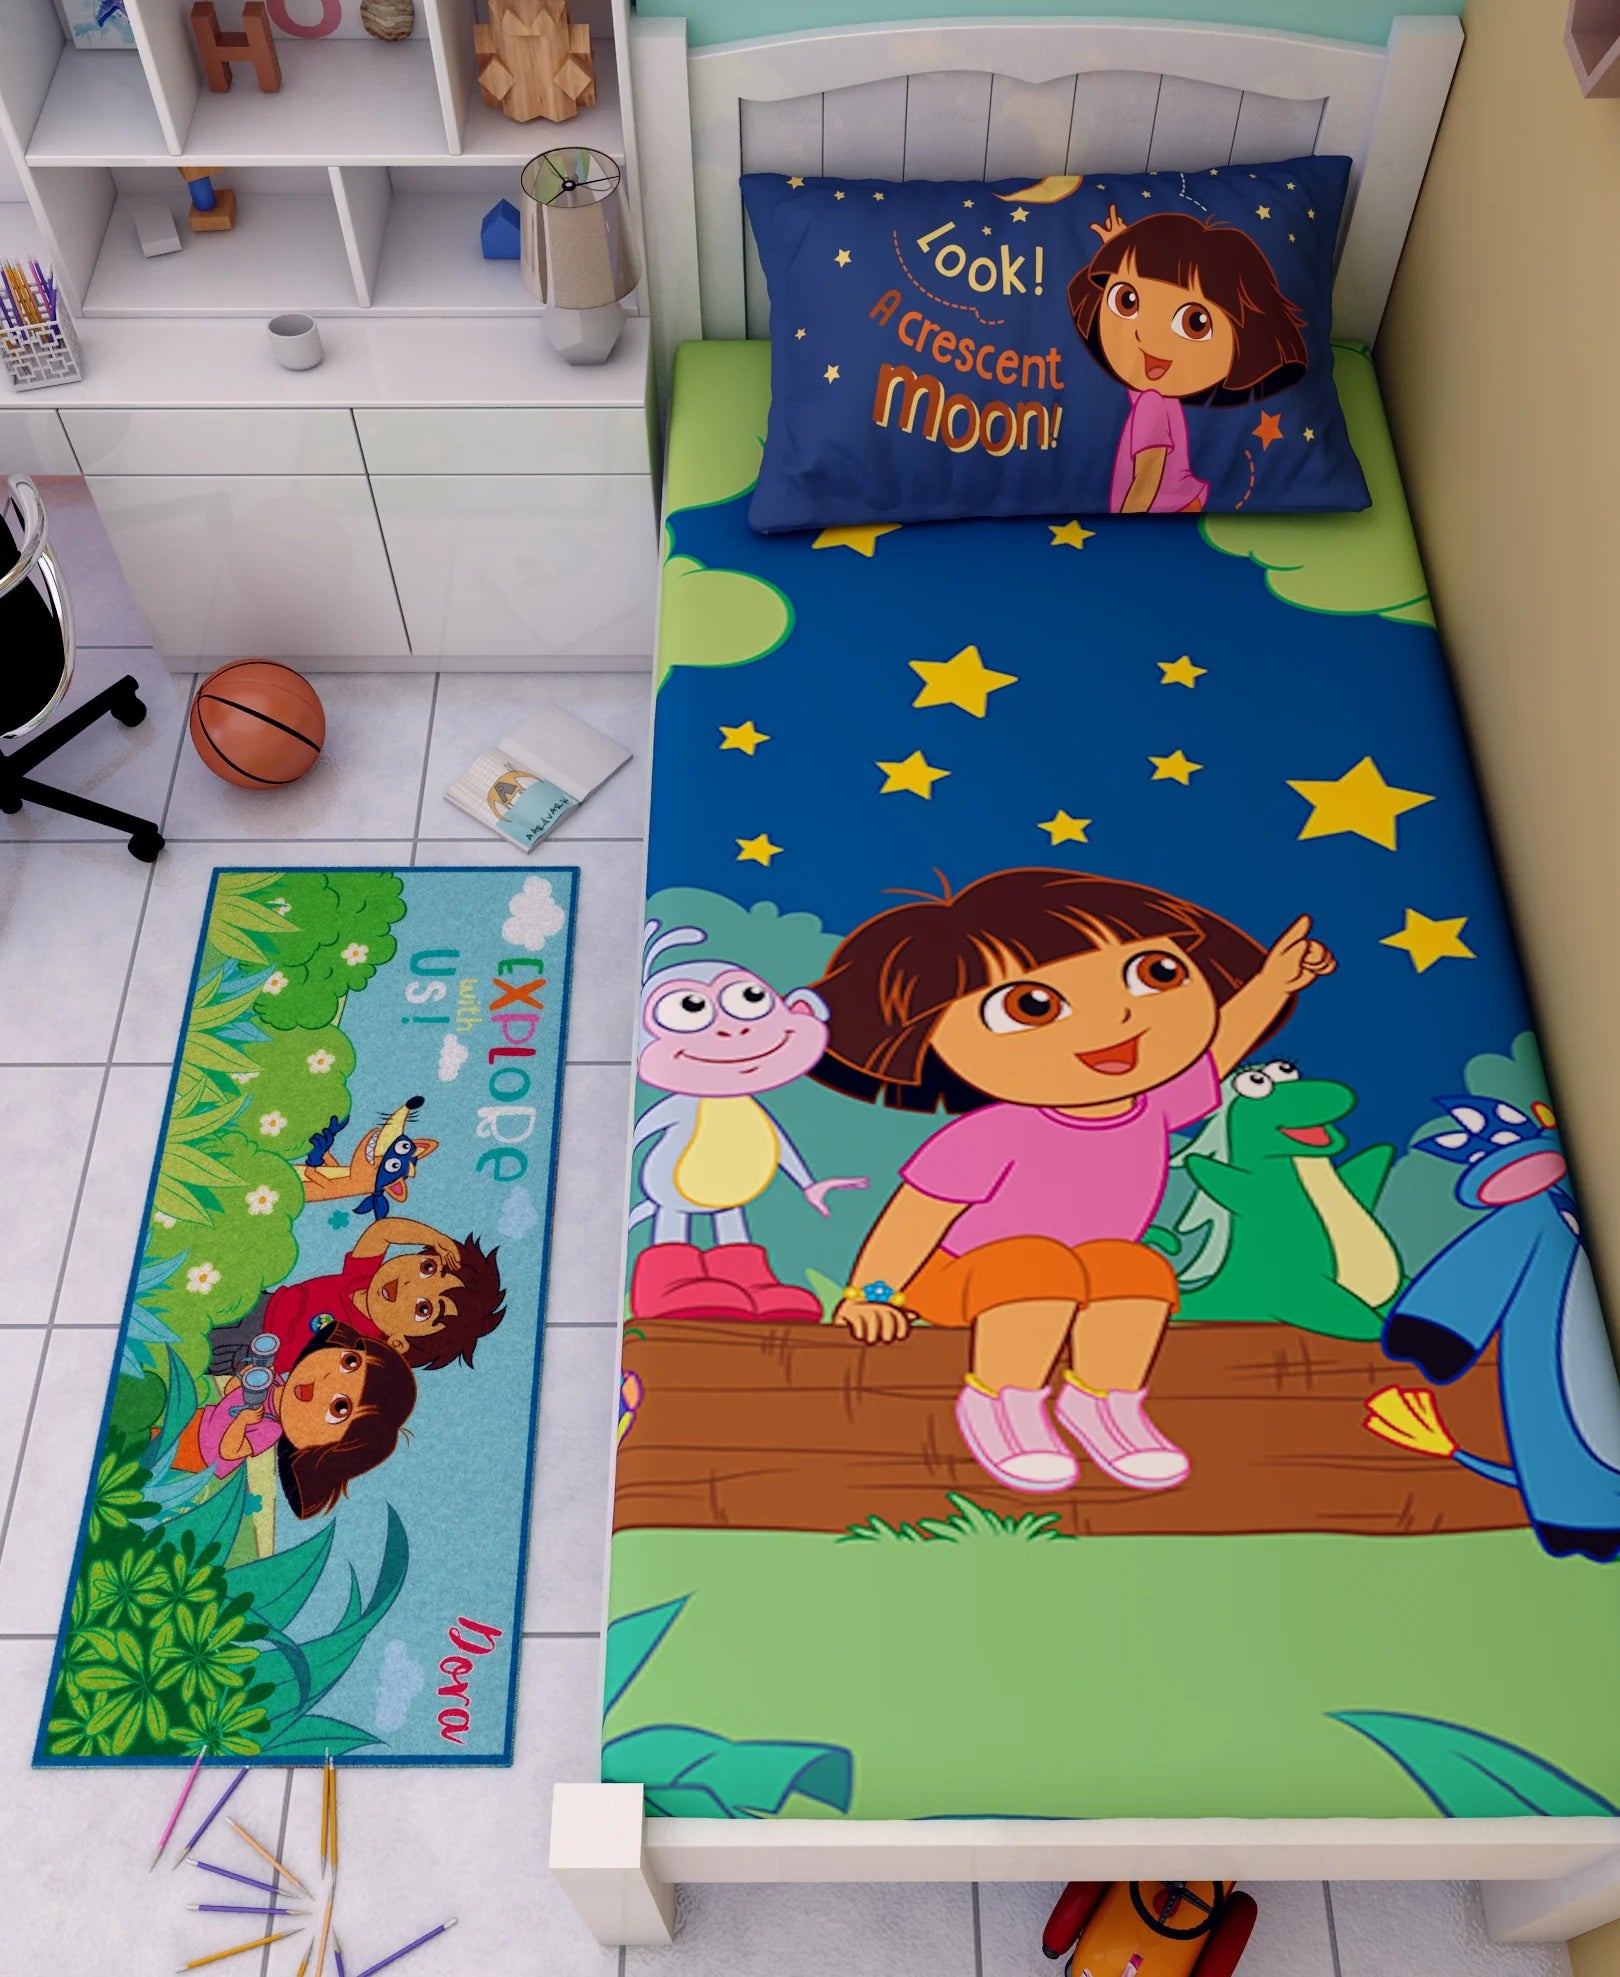 Athom Living Dora The Explorer Cotton Single Kids Bedsheet With Runner Carpet